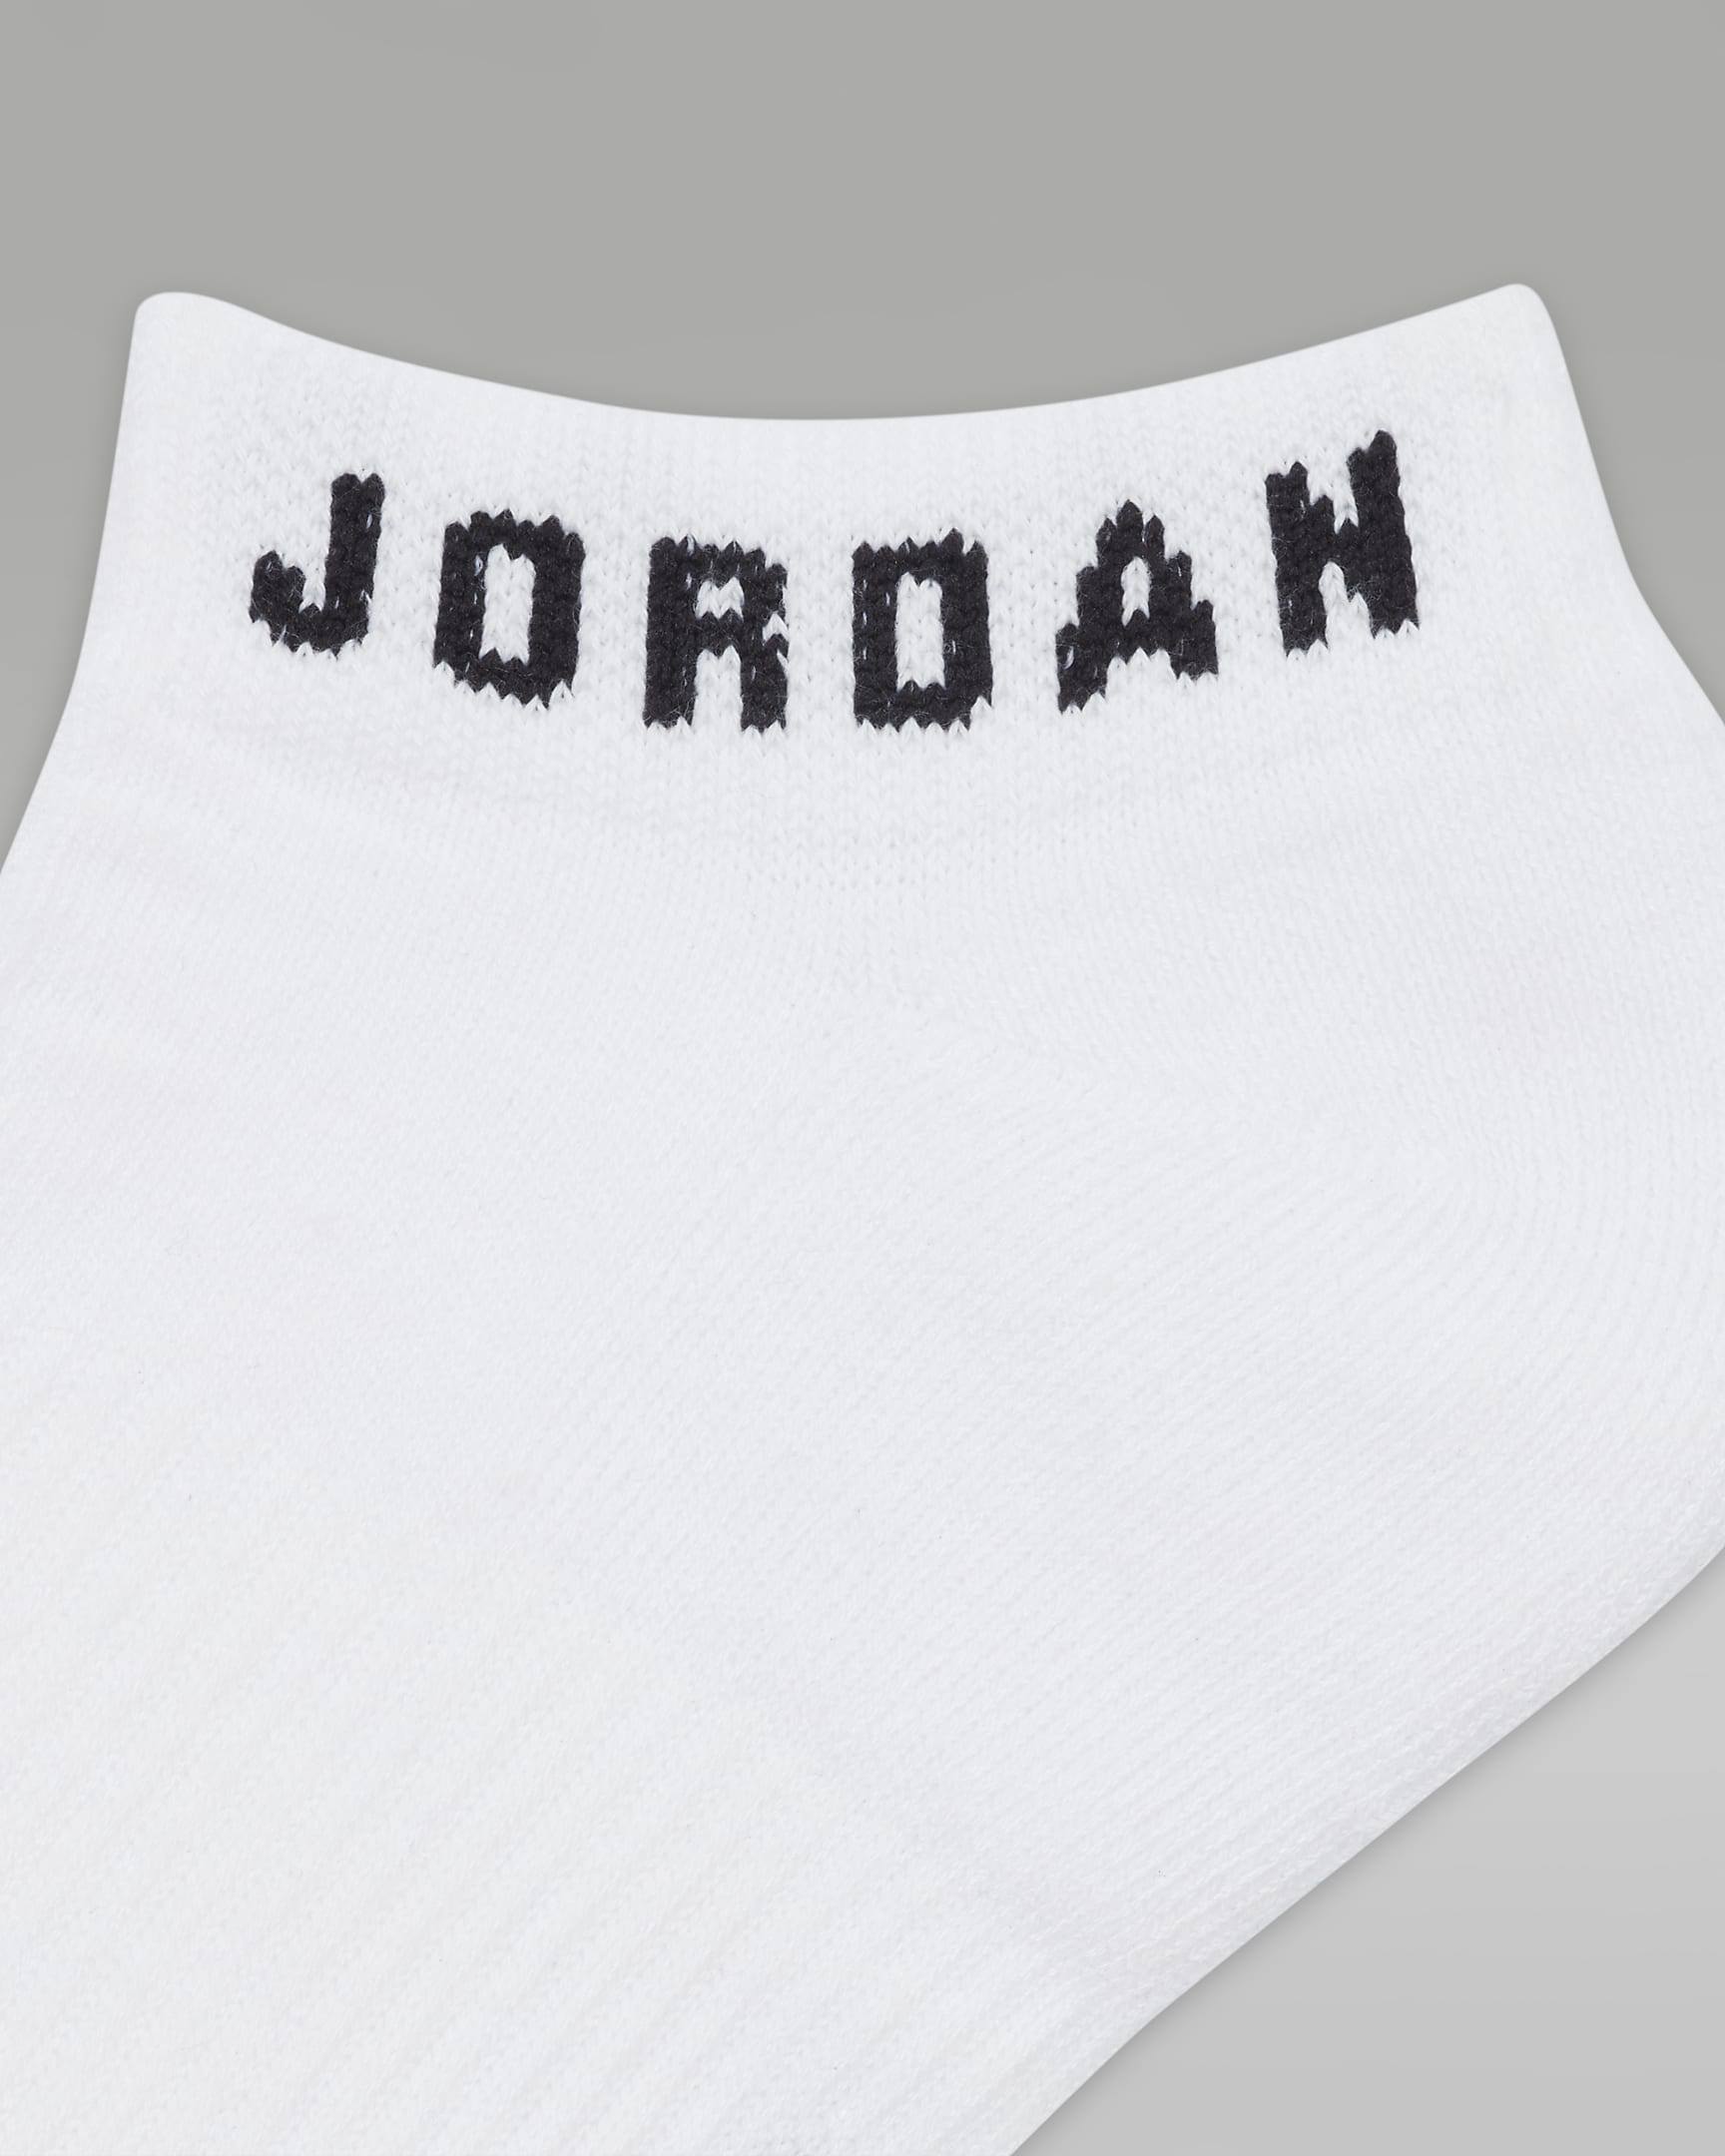 Jordan Everyday No-Show Socks (3 Pairs) - Multi-Colour